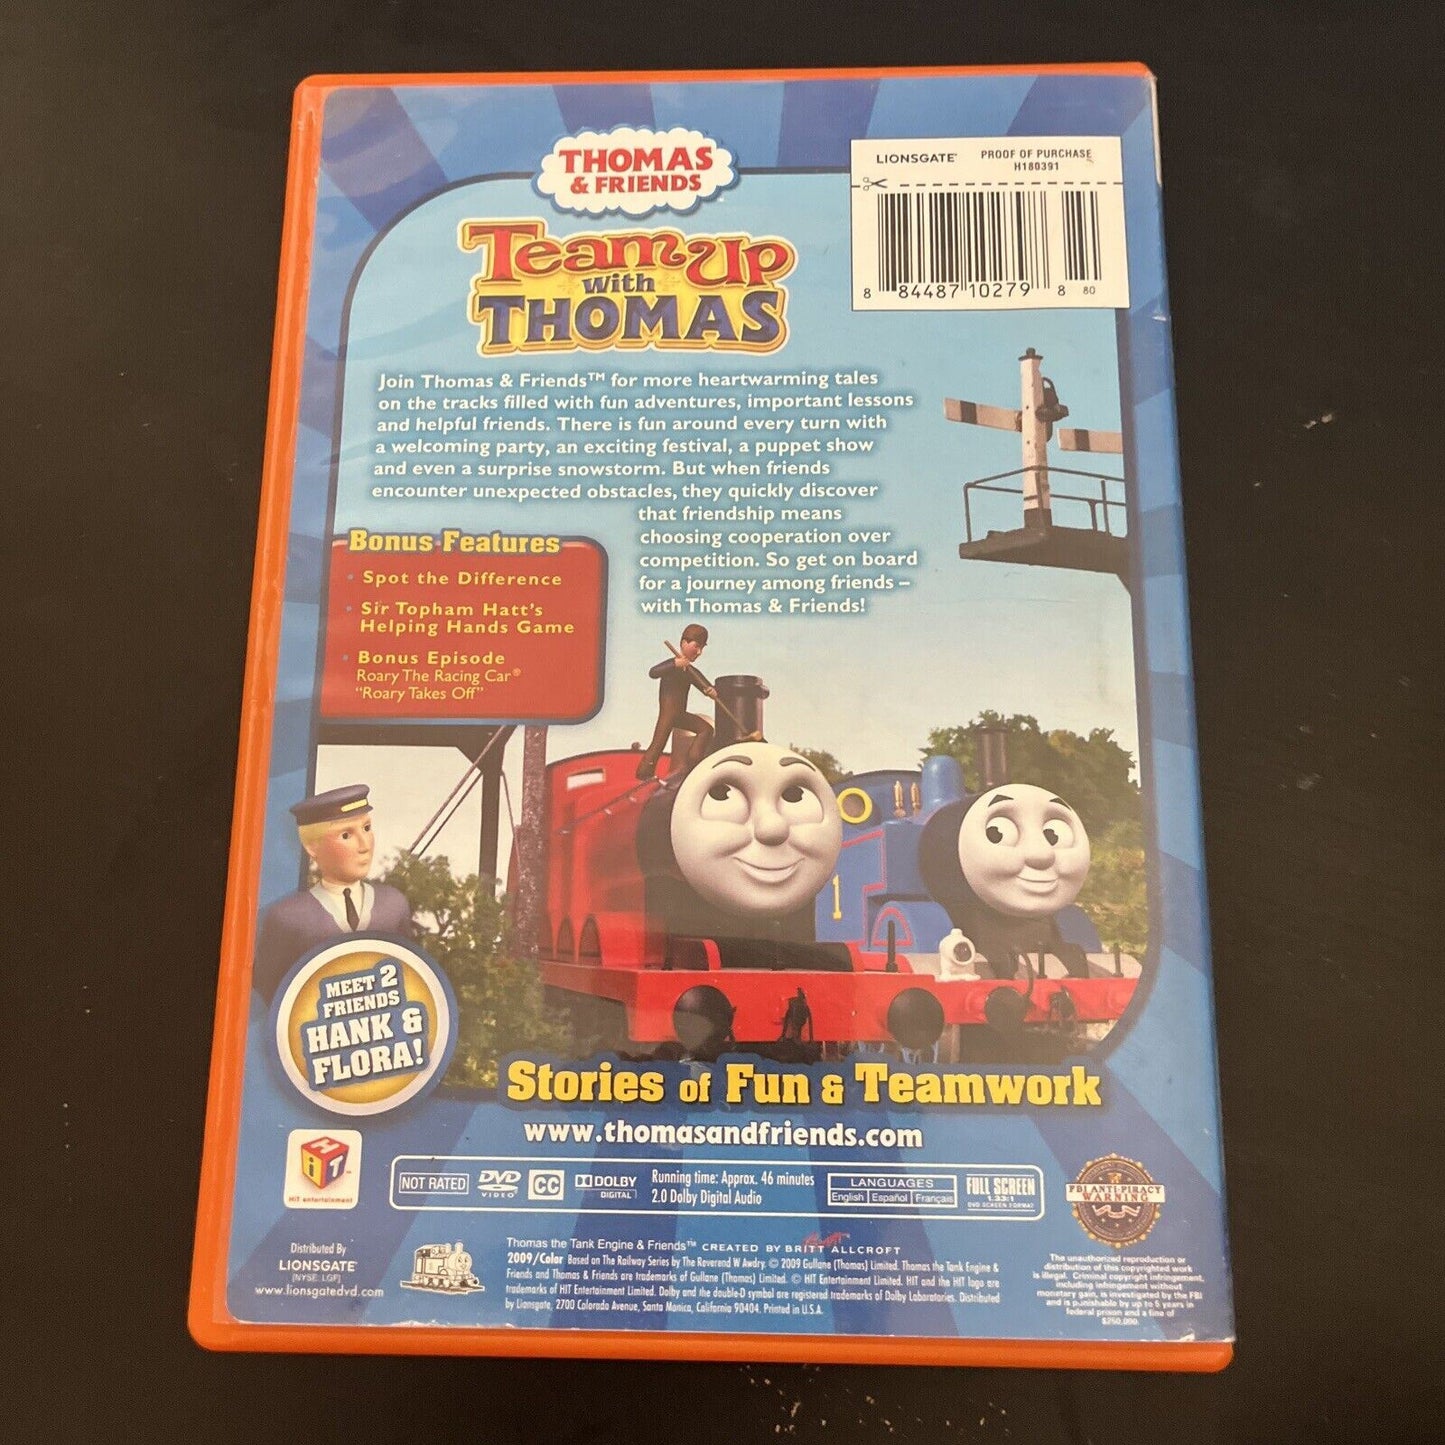 Thomas & Friends - Team up with Thomas (DVD, 2009) Region 1